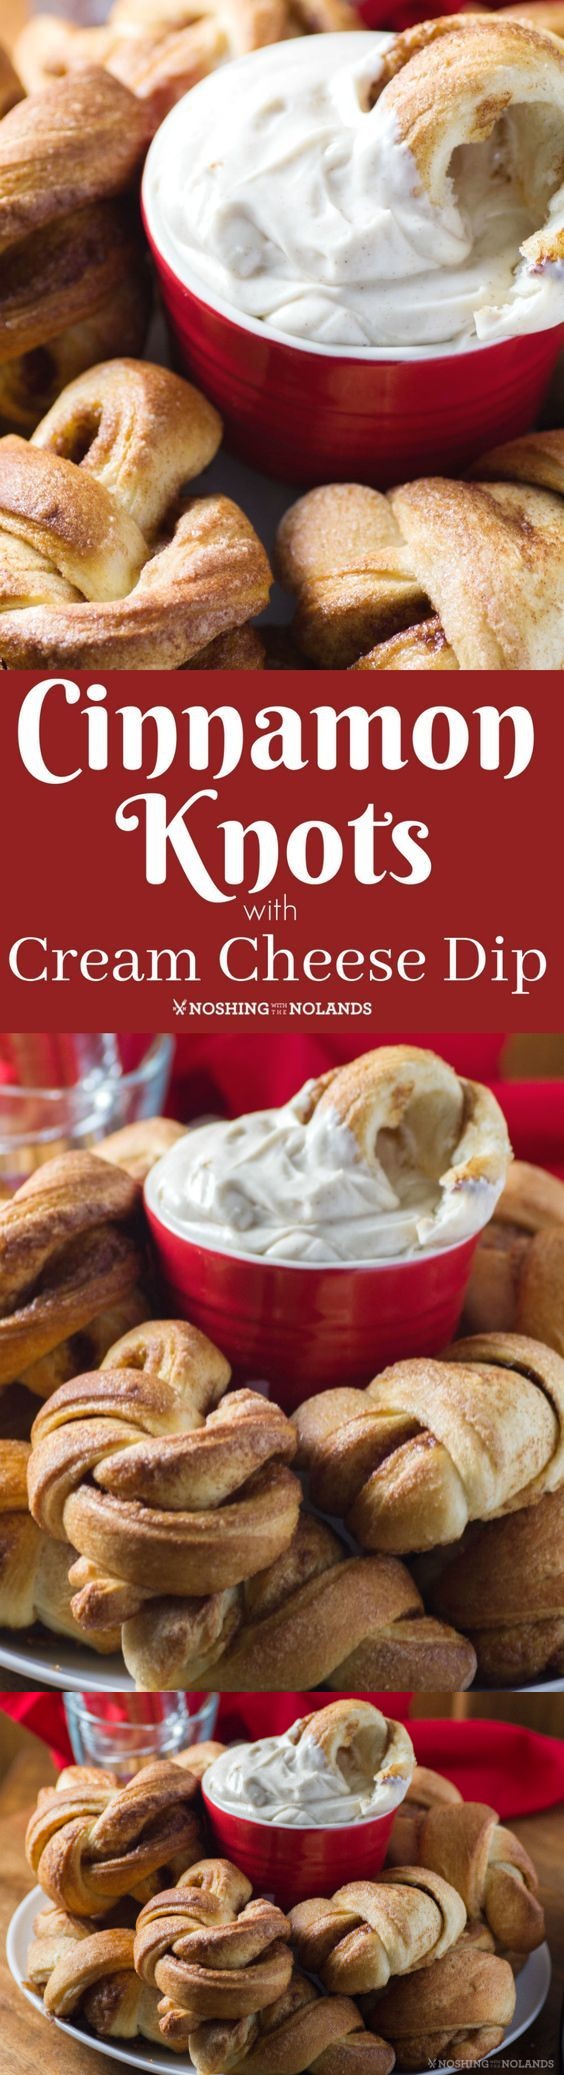 Cinnamon Knots with Cream Cheese Dip